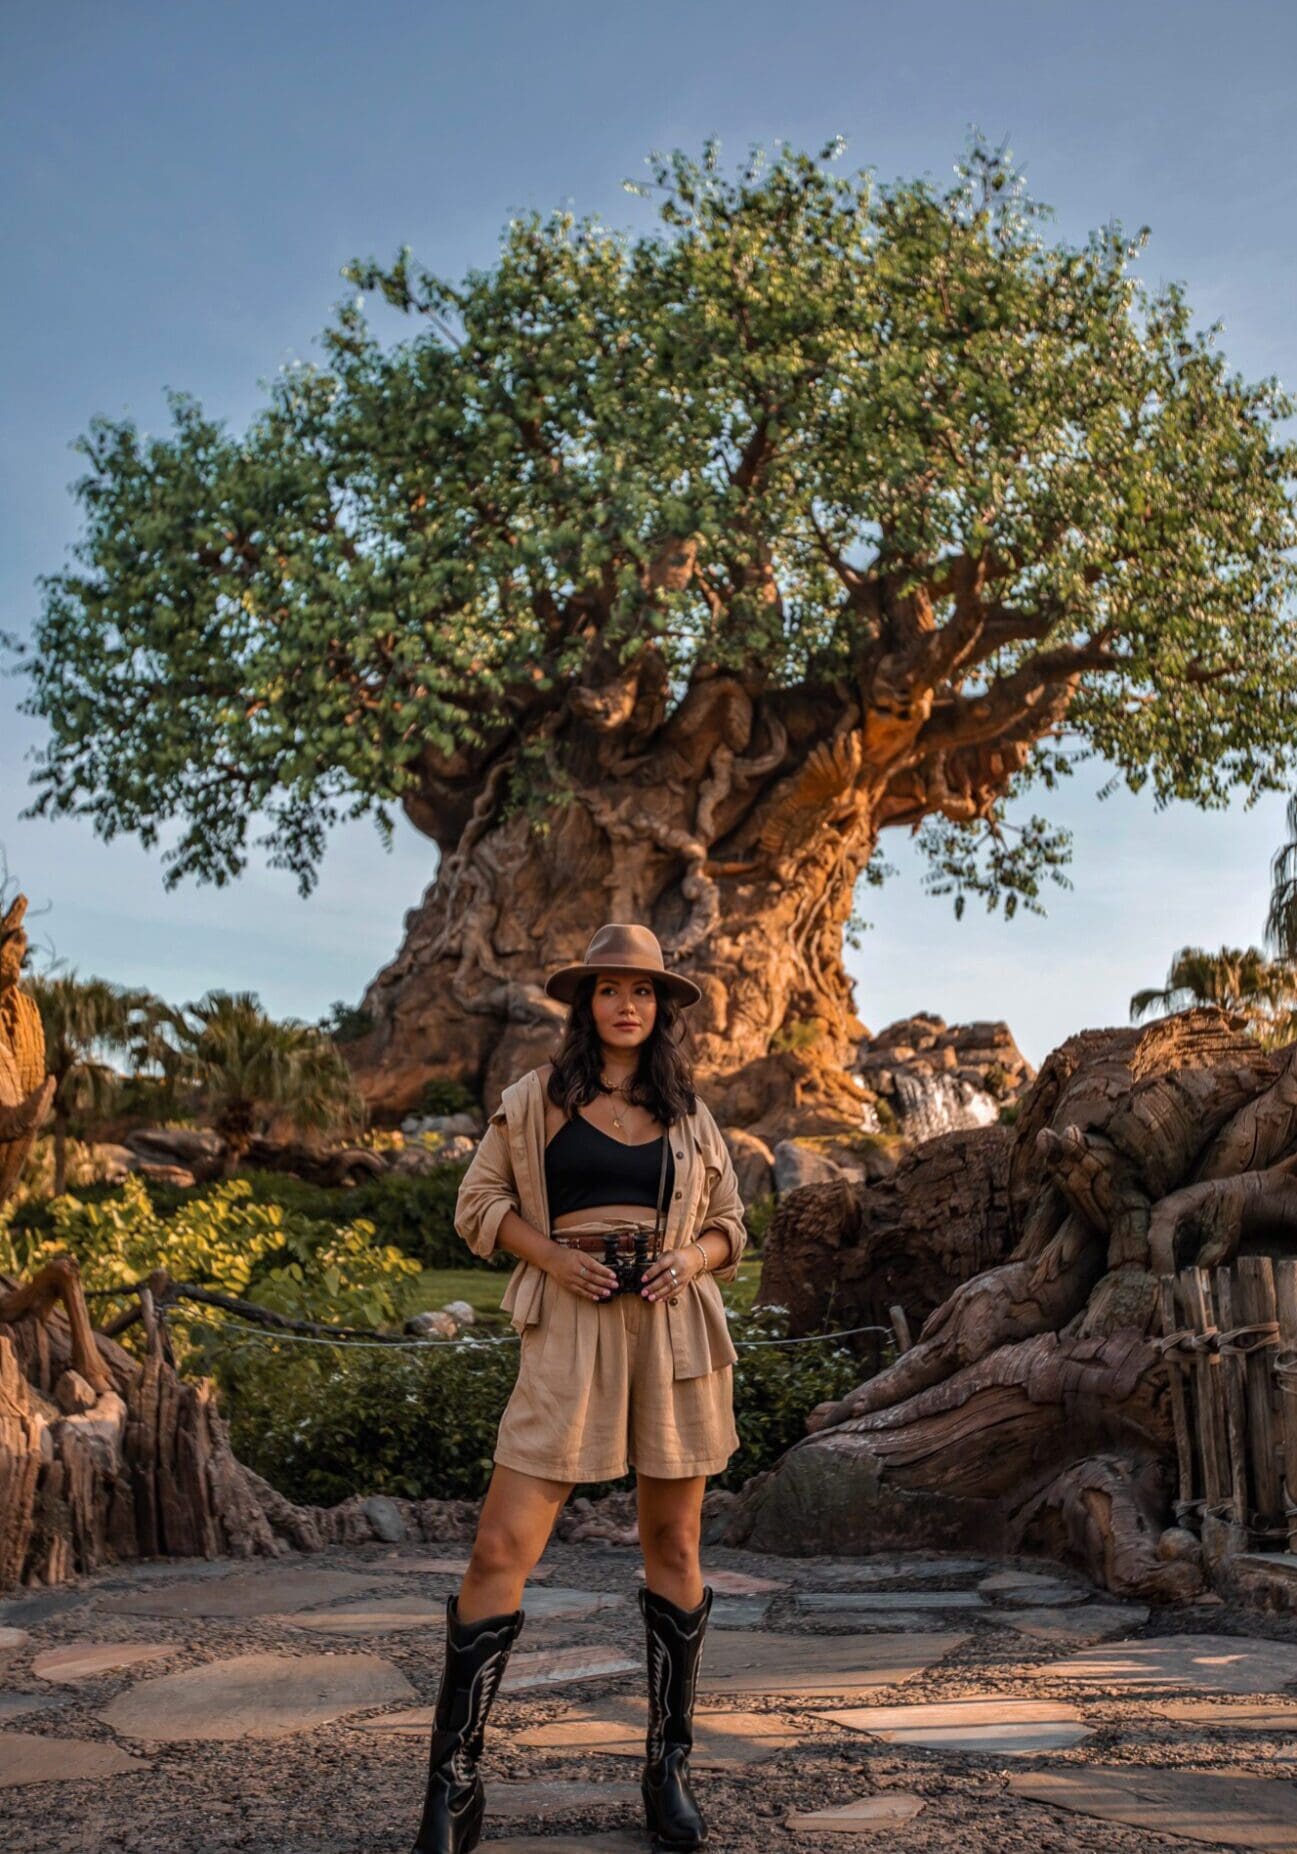 Tree of Life Animal Kingdom Photo Spots Disney World Florida Travel Holiday Guide